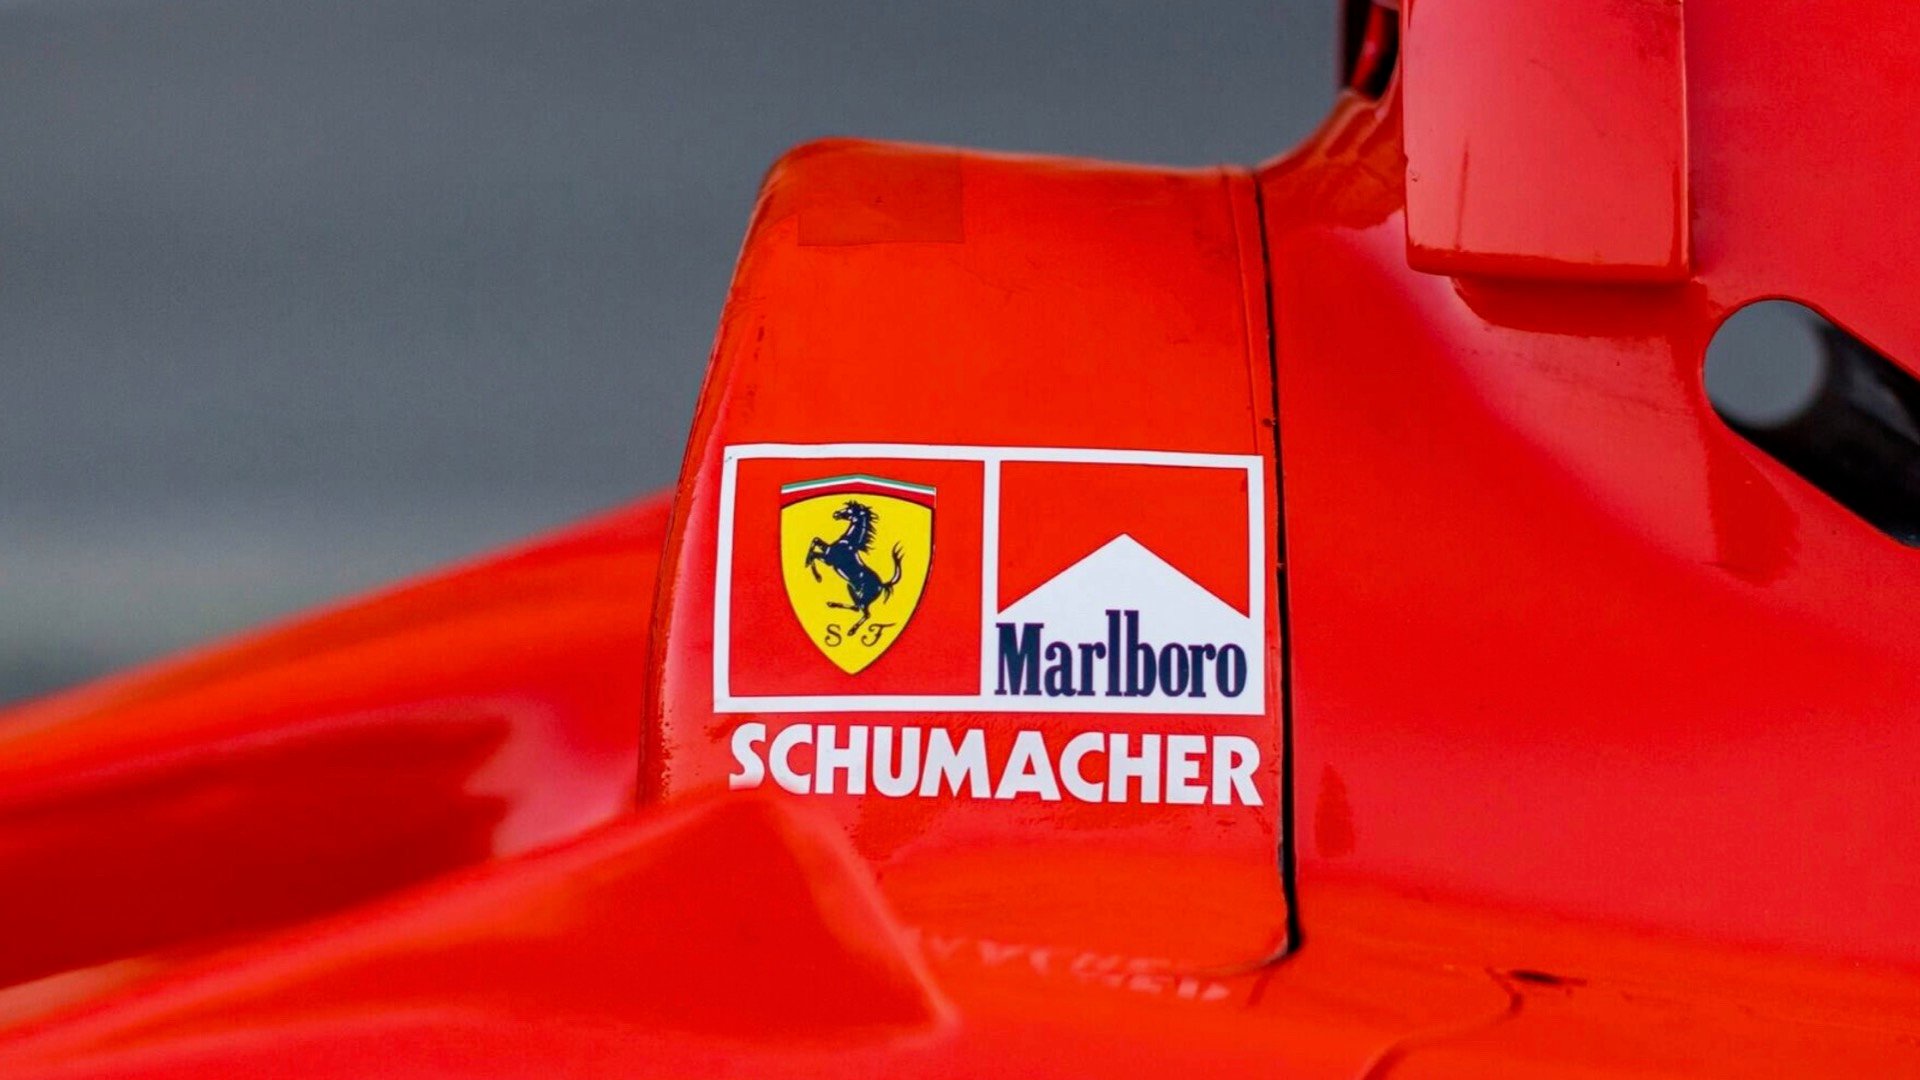 Ferrari F300 Chassi 187 Michael Schumacher. Foto: RM Sotheby's 